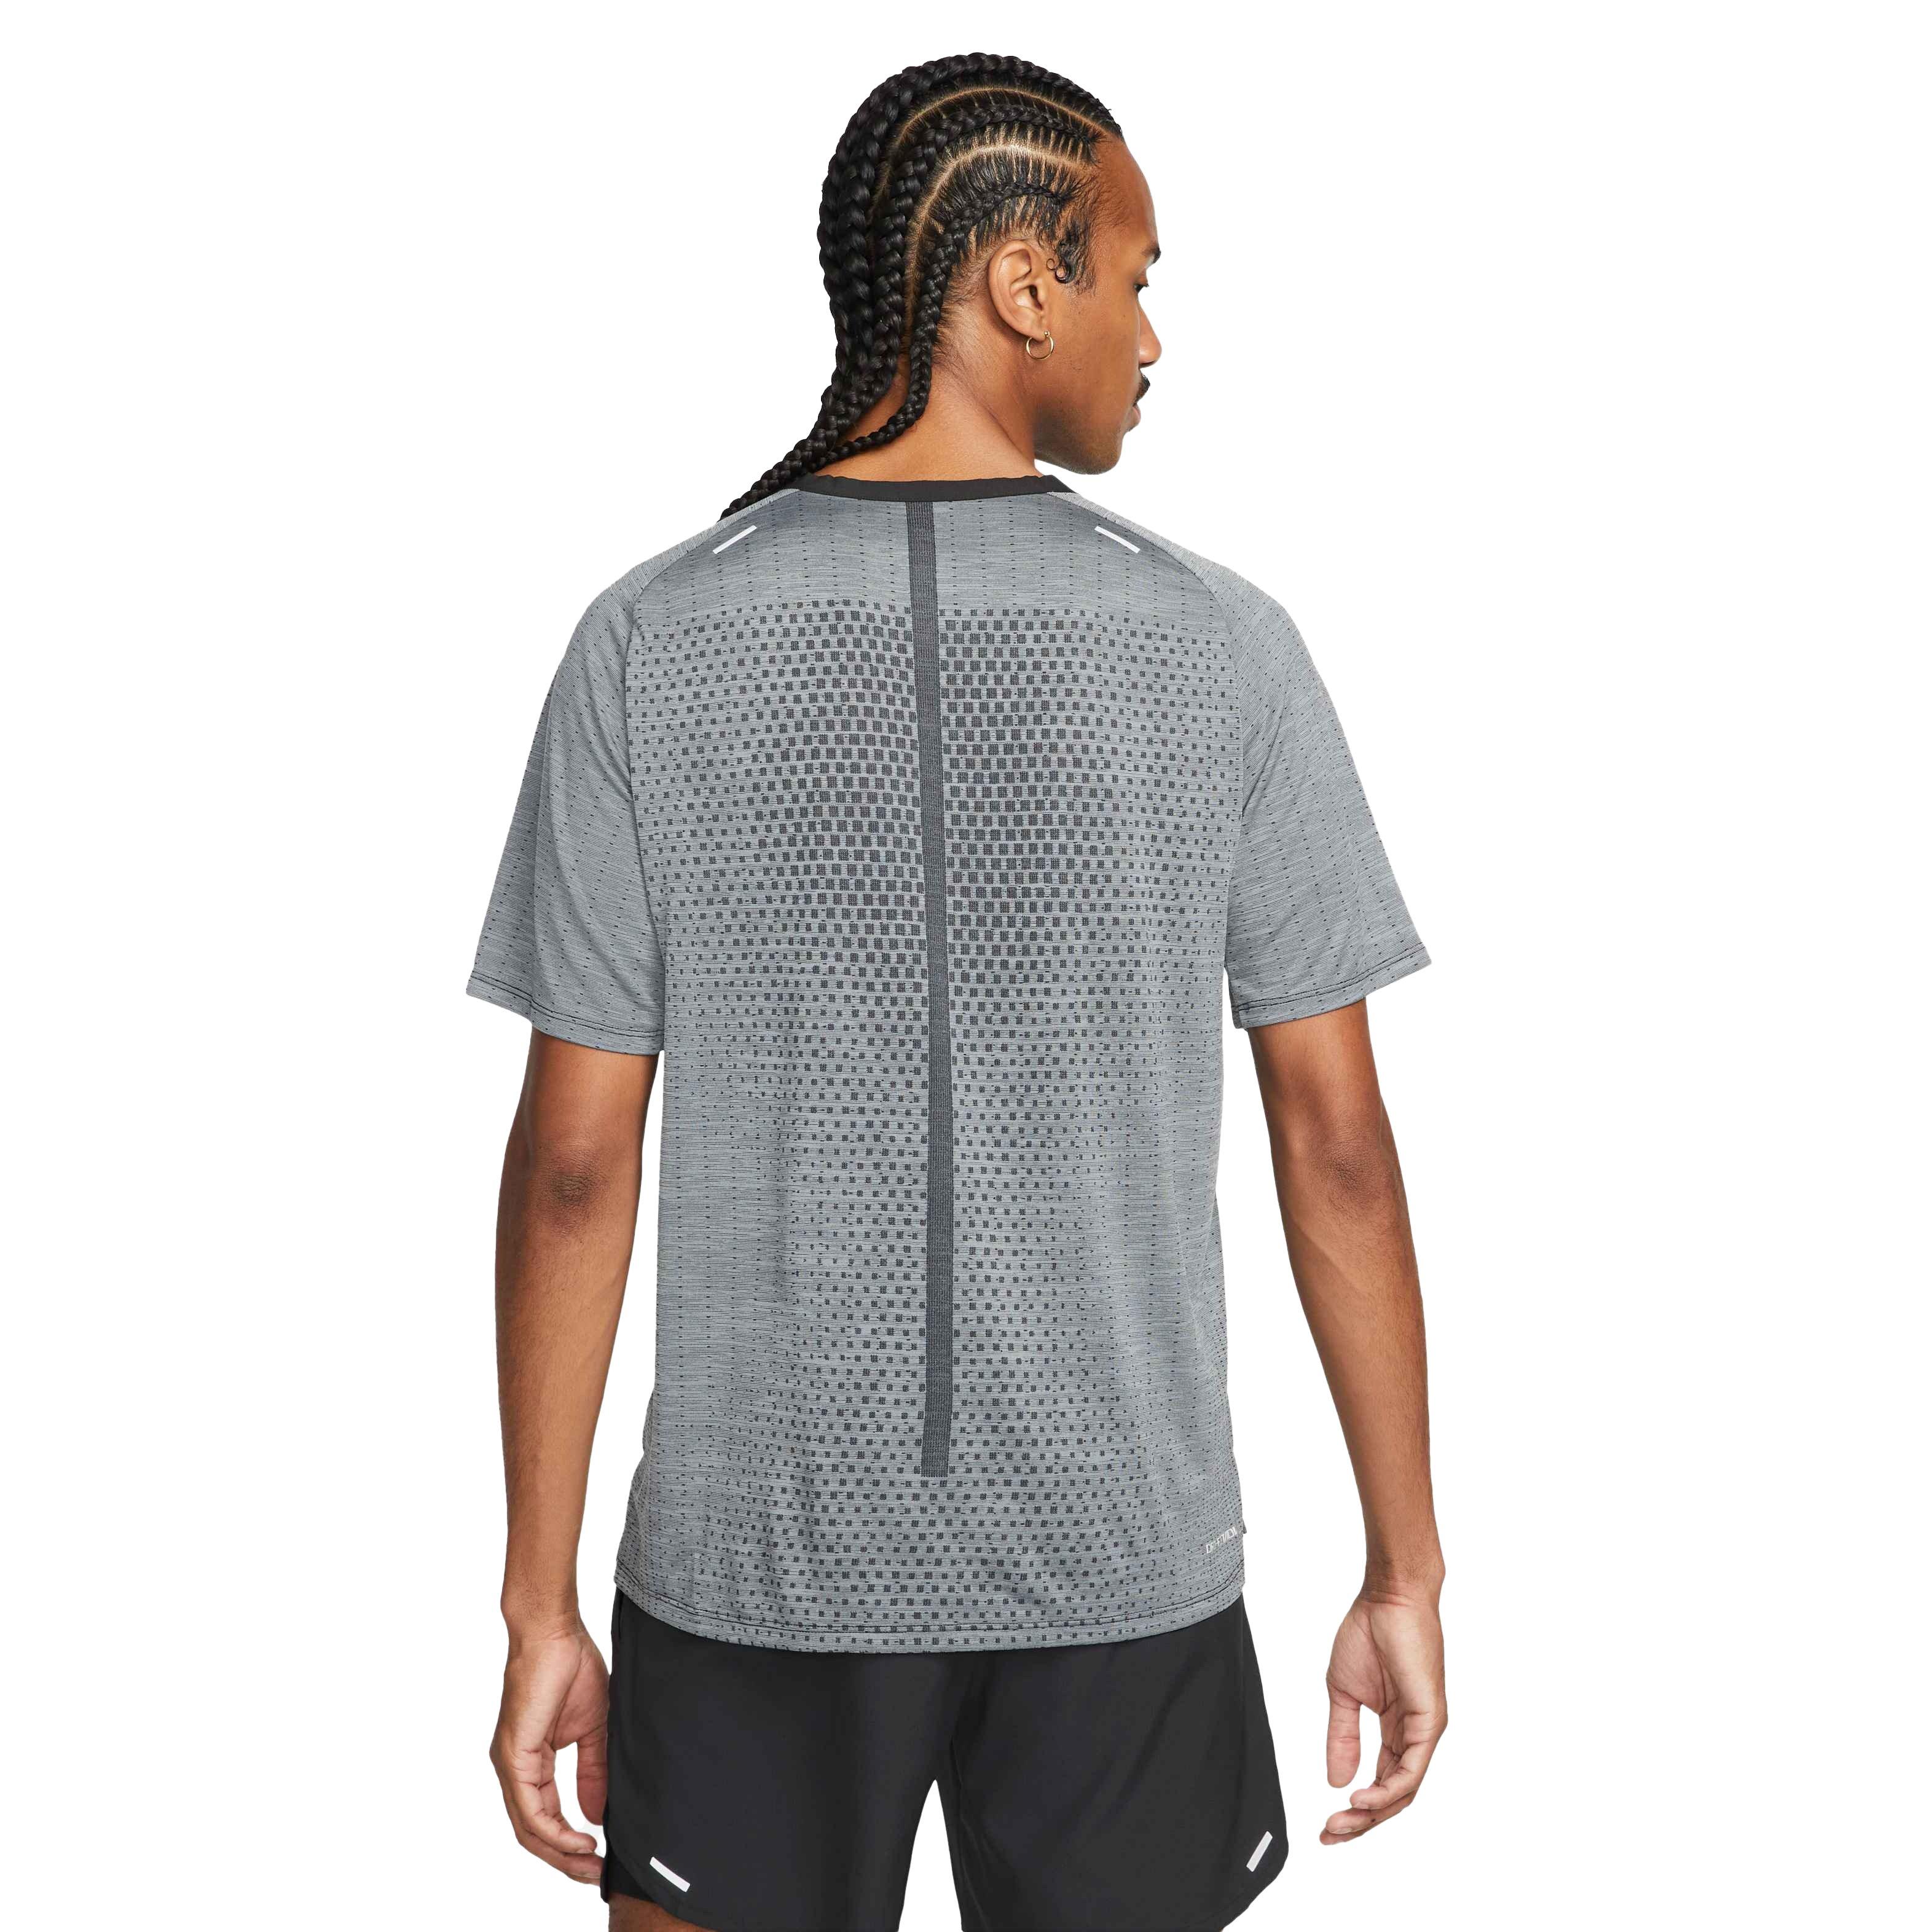 Nike Pro Adult Dri‑Fit 3.0 Arm Sleeves - Hibbett